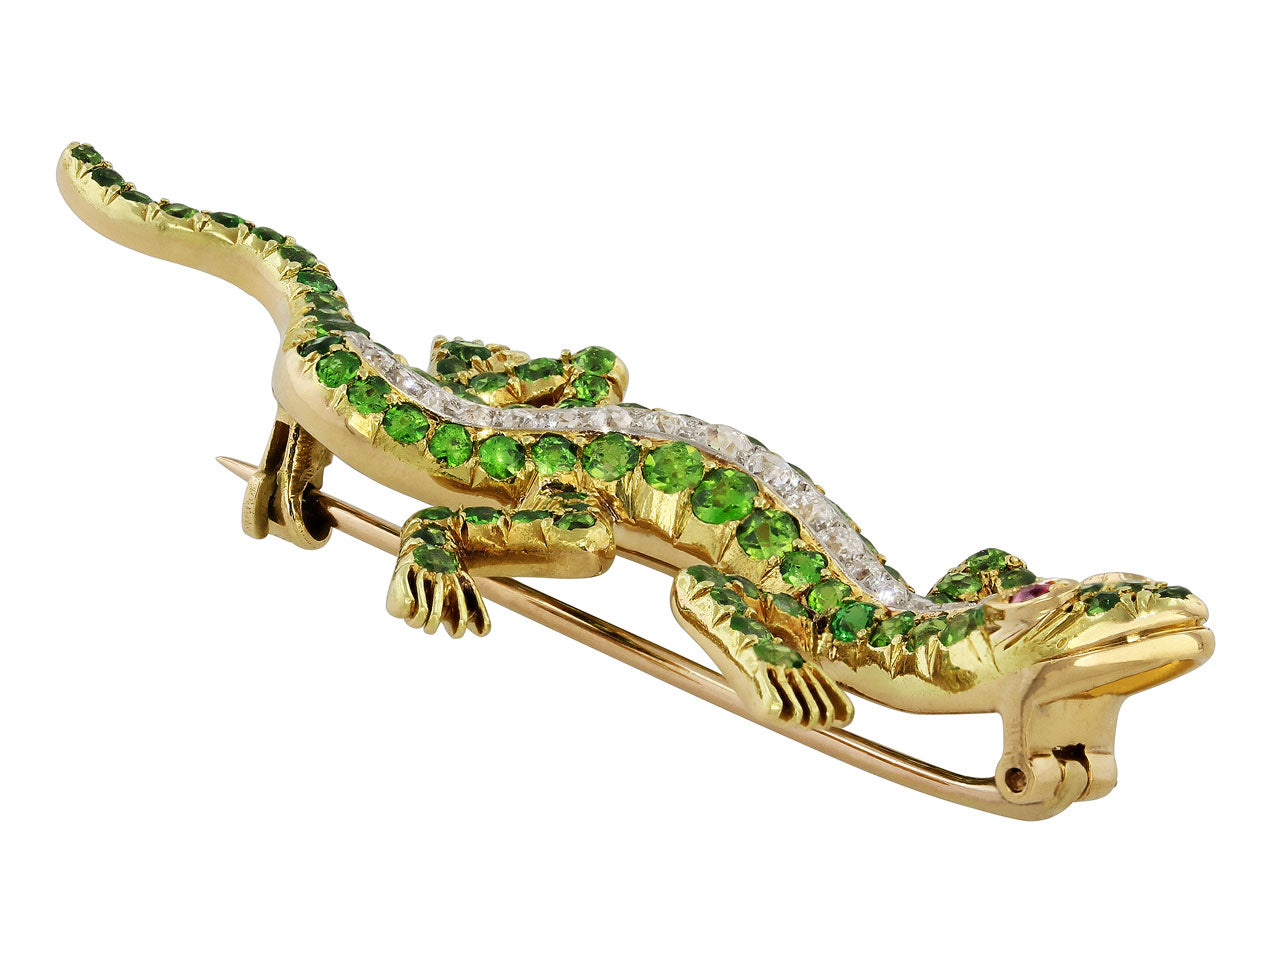 Antique Victorian Demantoid Garnet and Diamond Salamander Brooch in 14K Gold